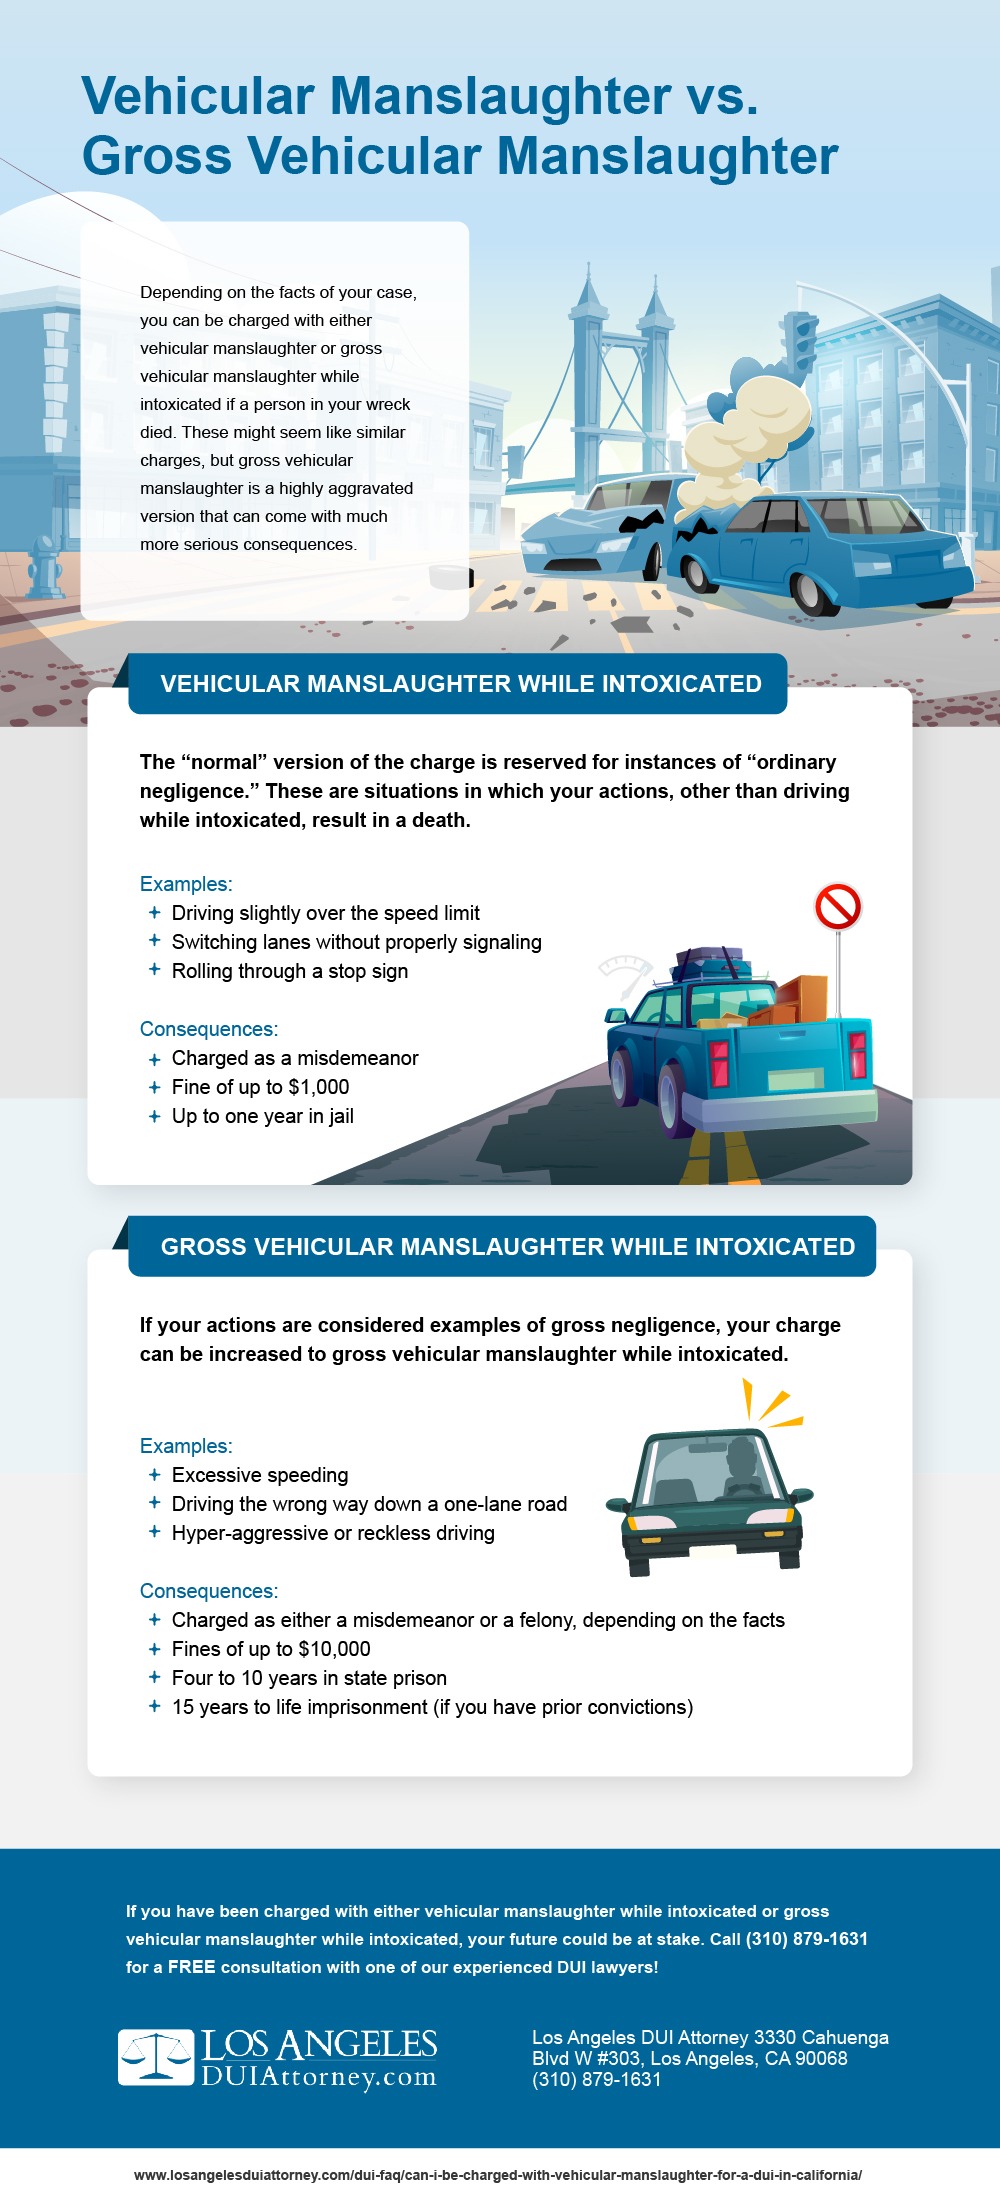 Vehicular Manslaughter vs. Gross Vehicular Manslaughter